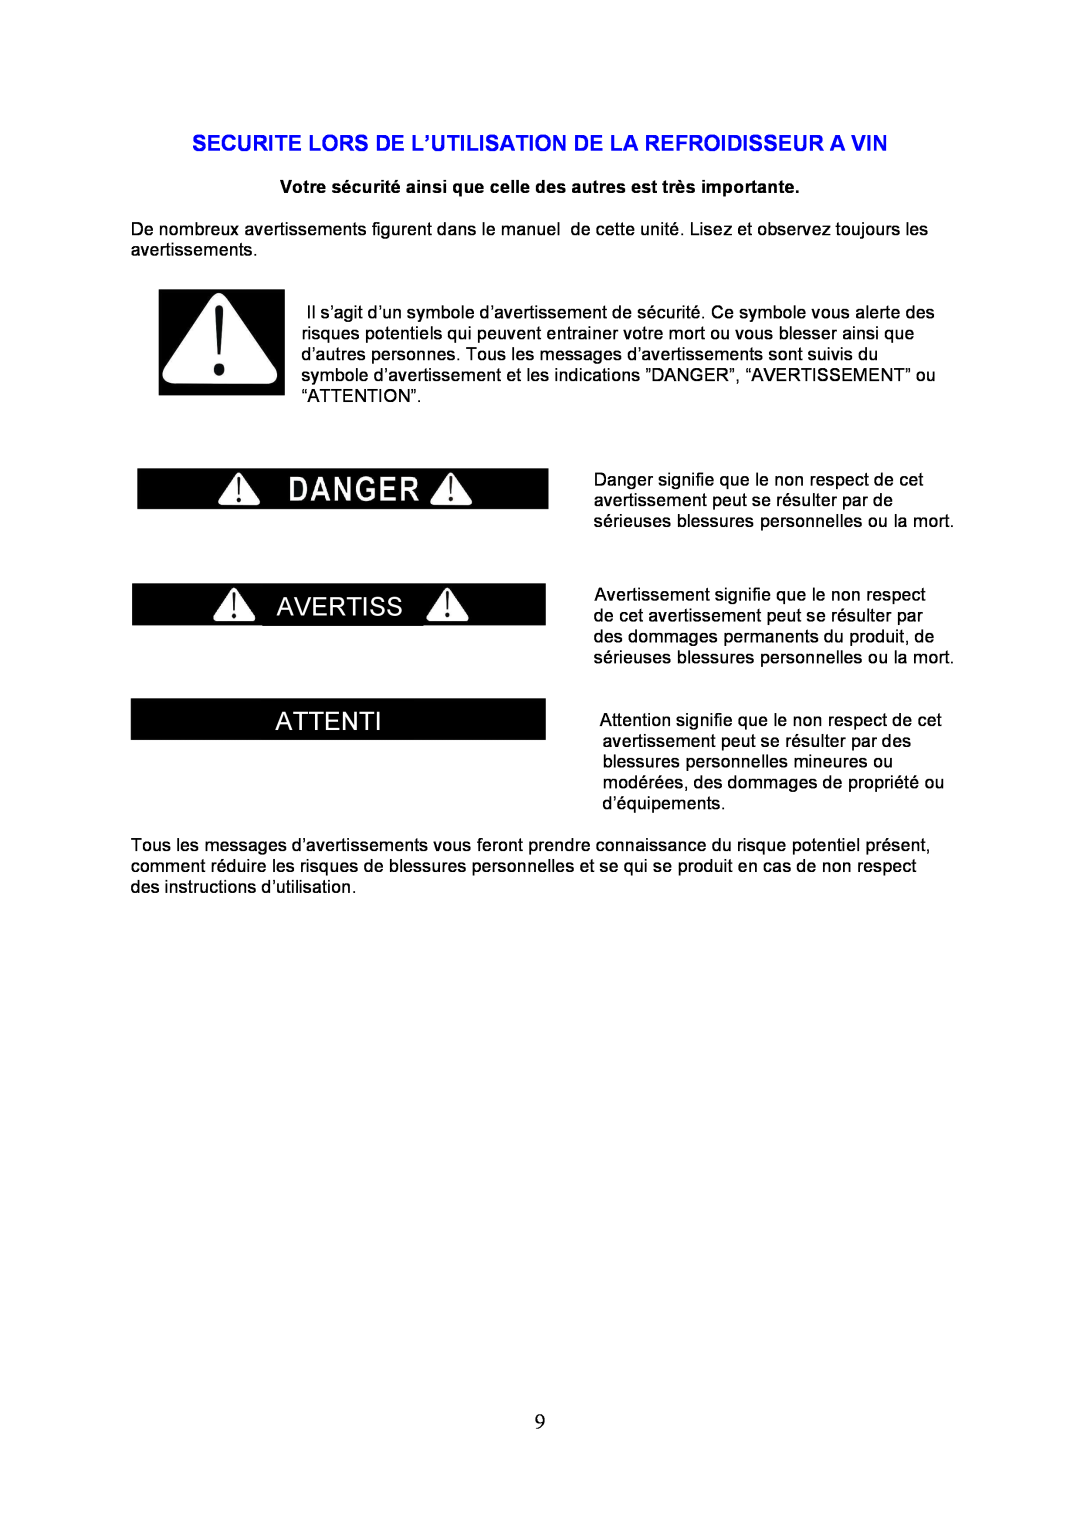 Igloo FRW154C instruction manual Avertiss Attenti 